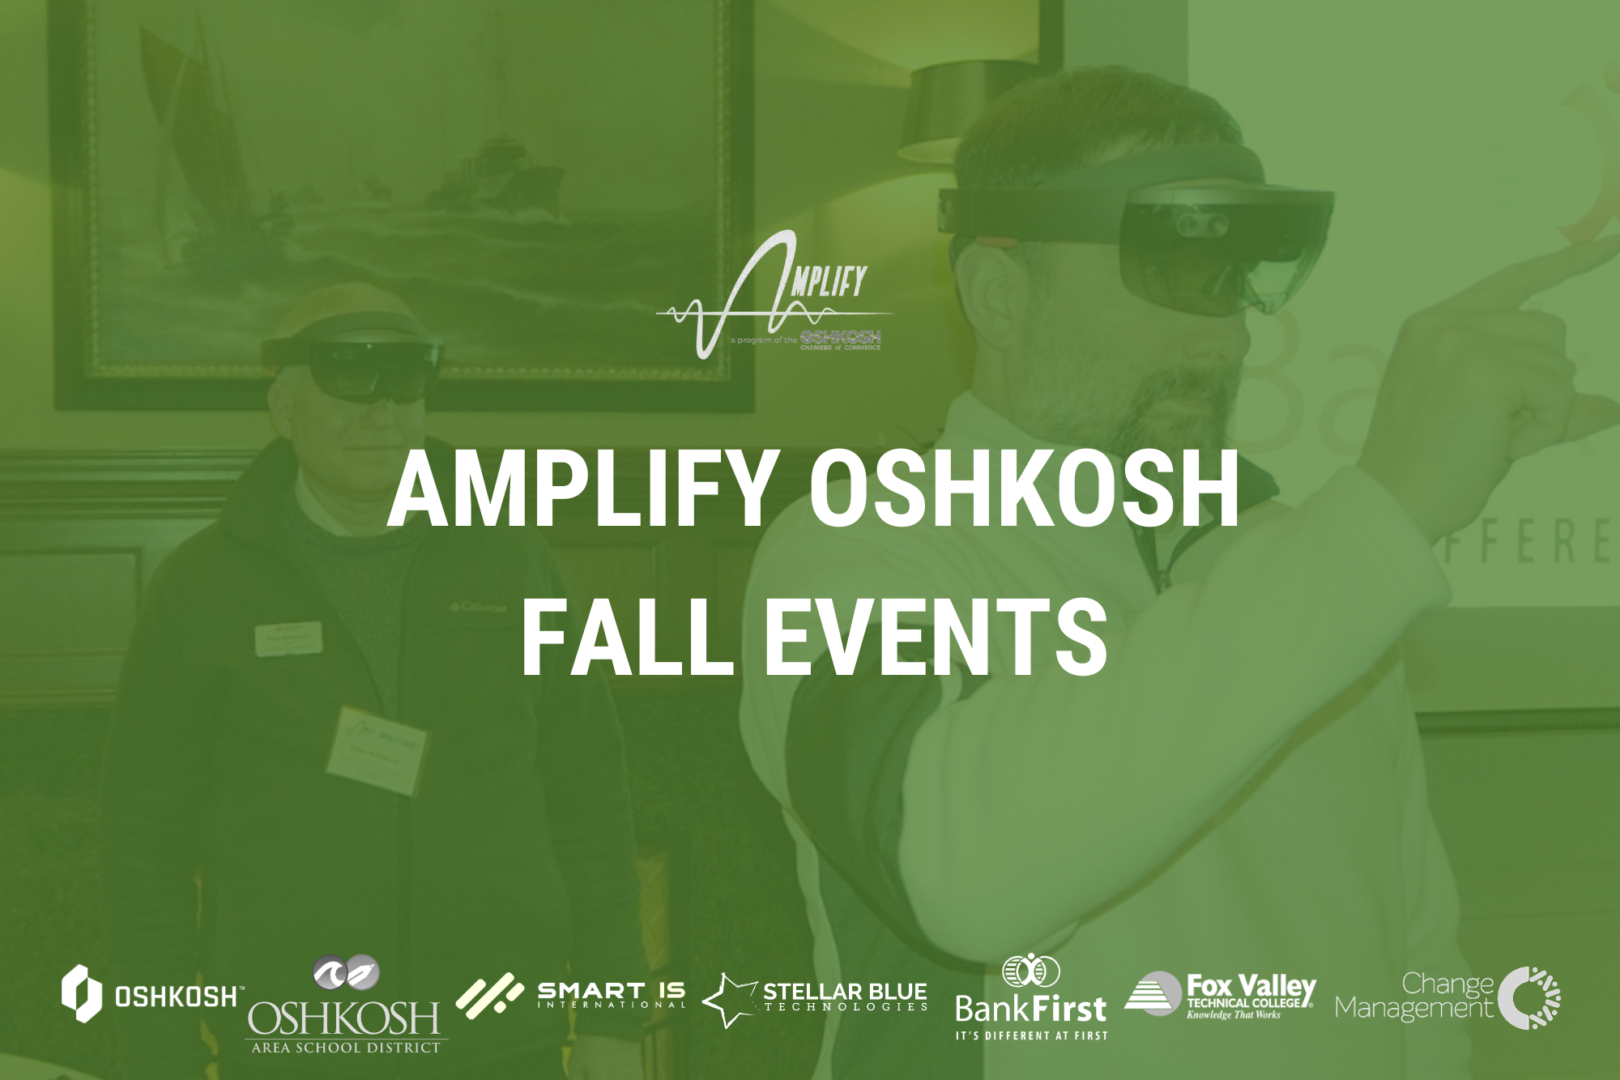 Amplify Oshkosh Fall Events